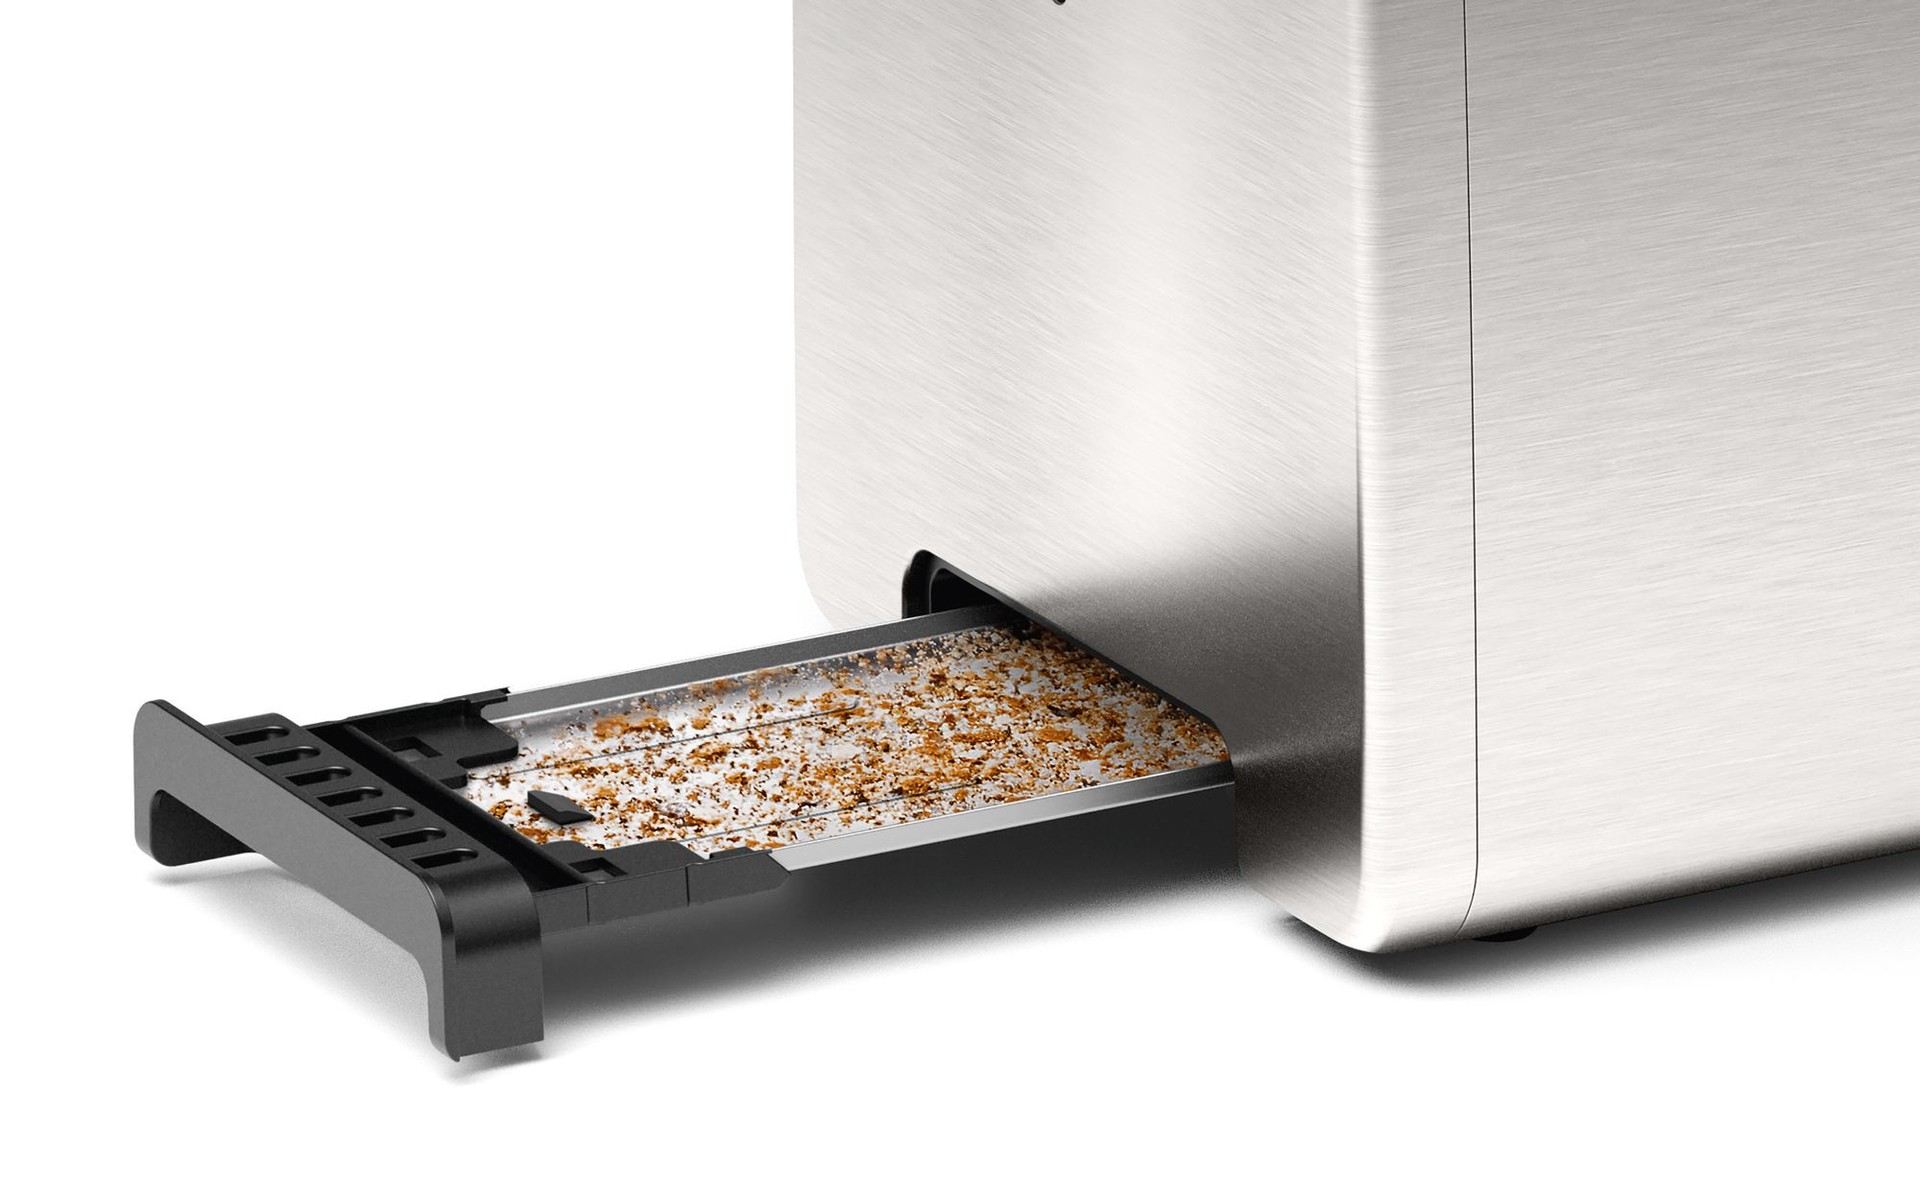 BOSCH TAT3P420 Toaster Acciaio (970 Schlitze: 2,0) Watt